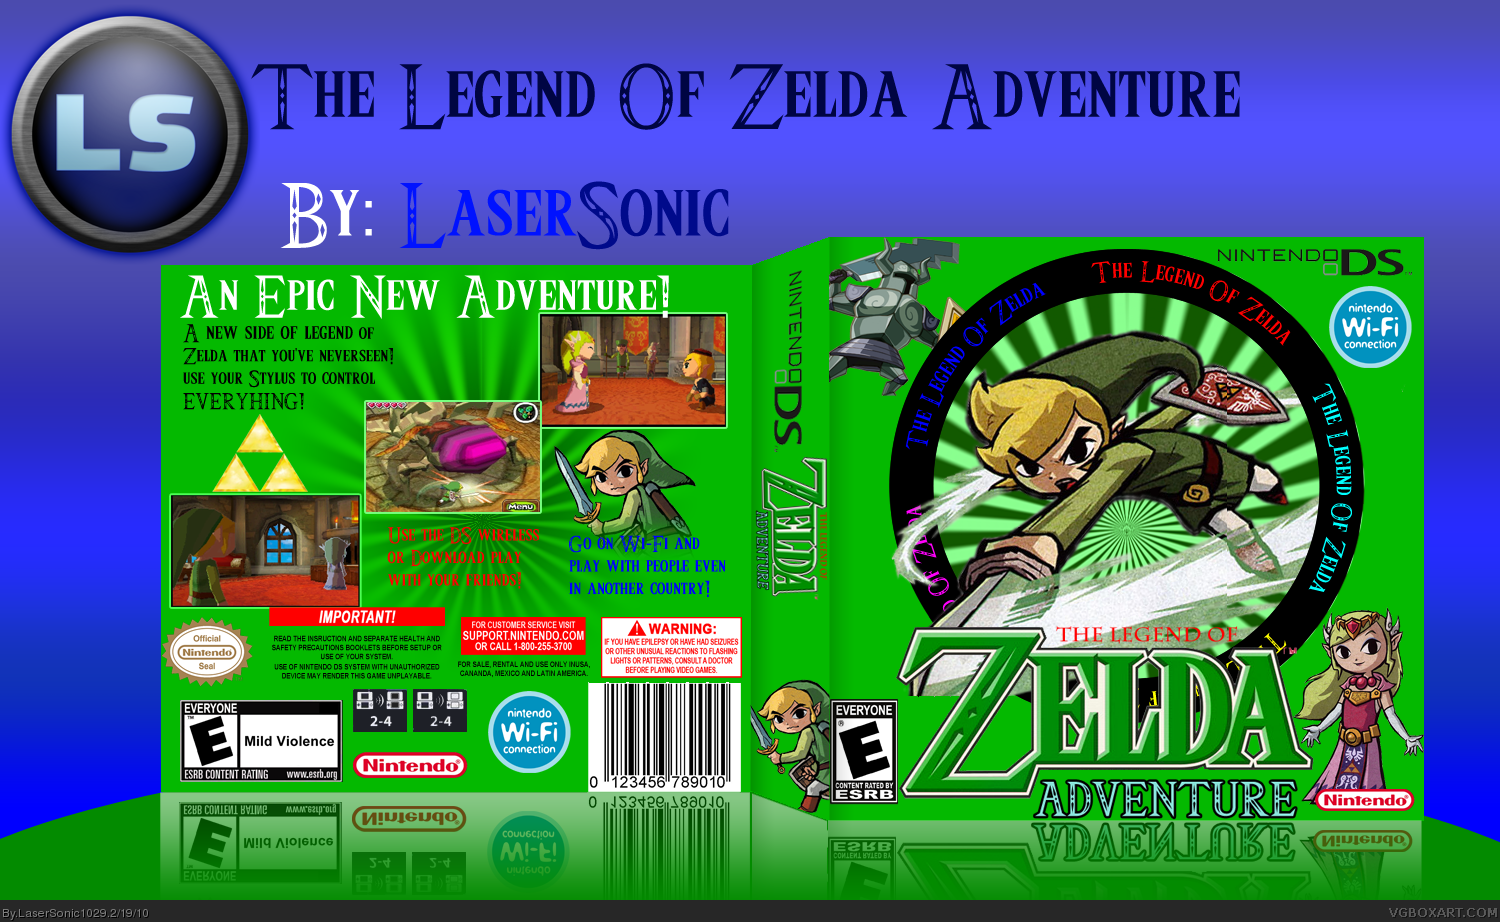 The Lengend Of Zelda Adventure box cover